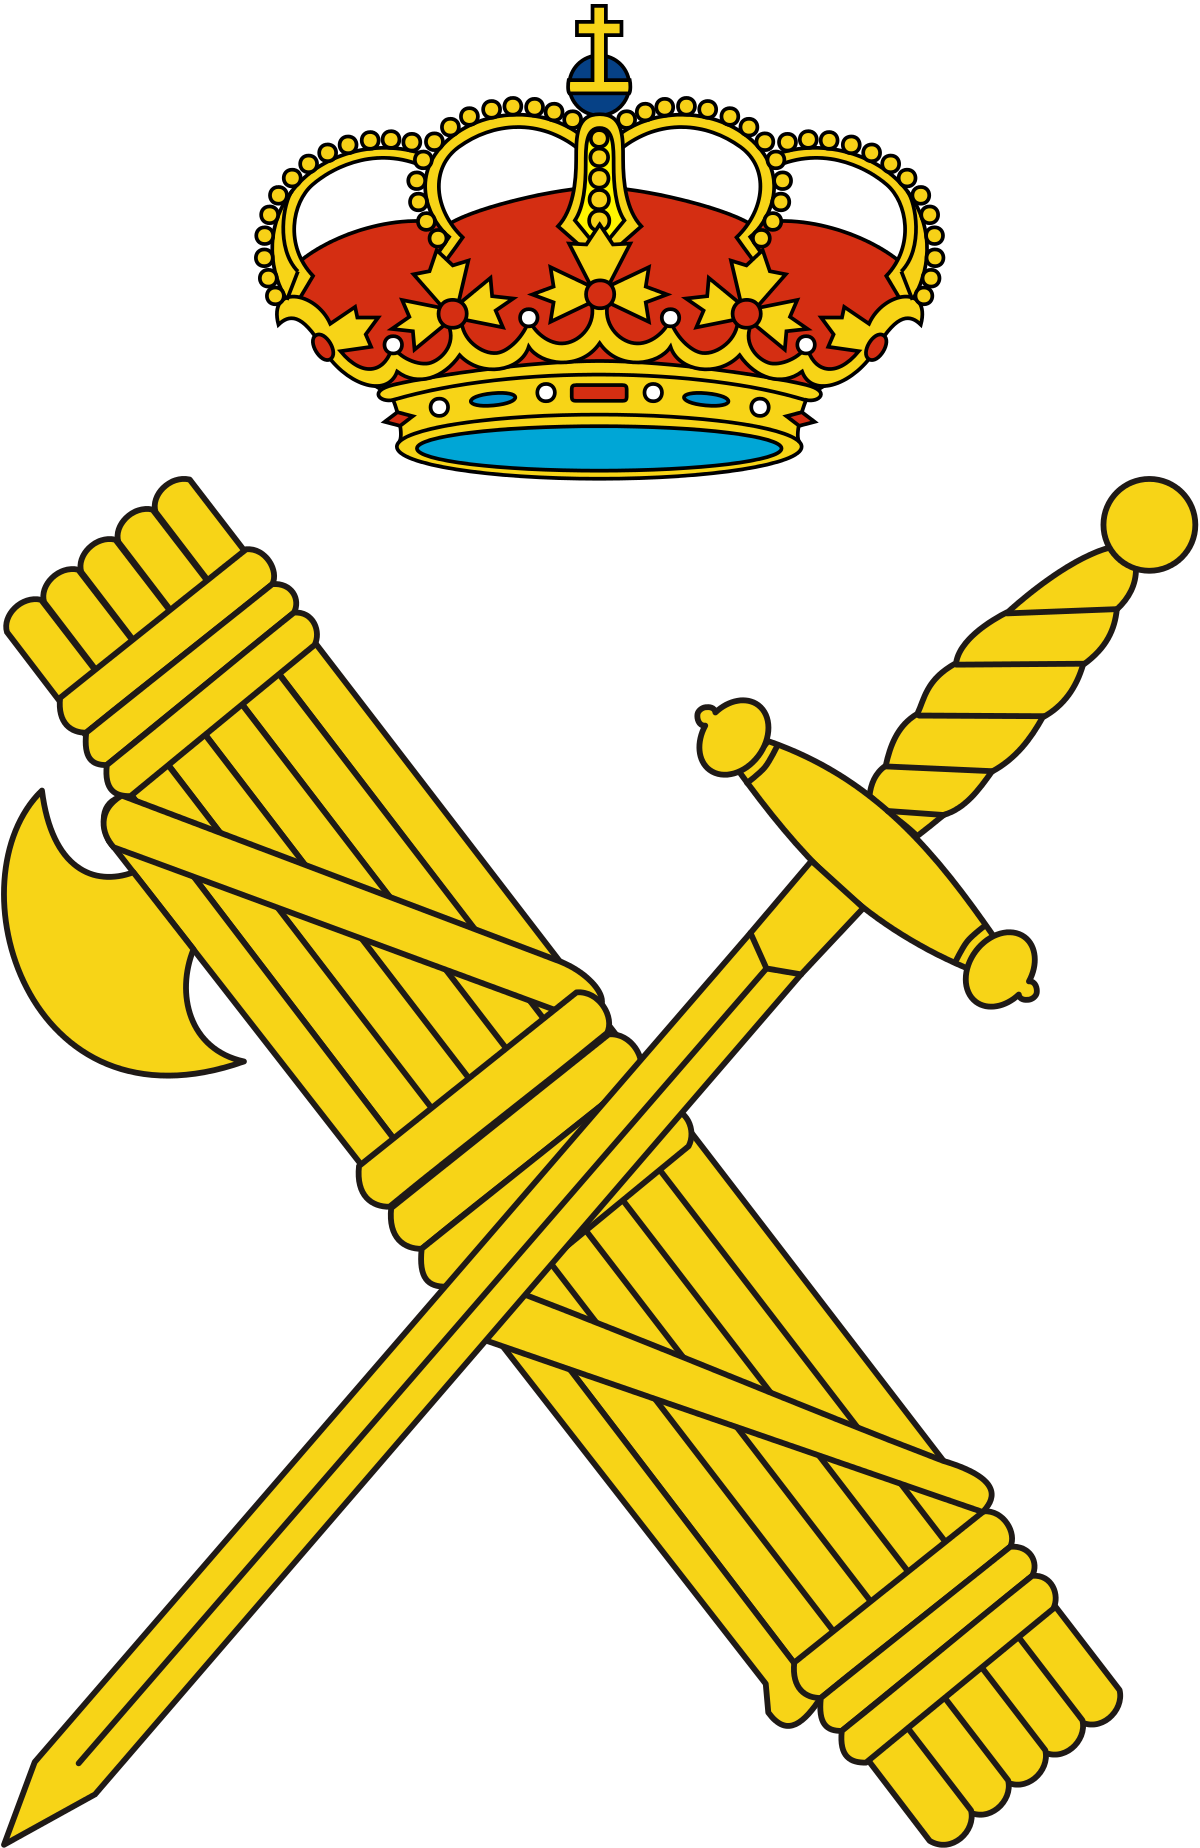 Guardia Civil (Ministry of Interior)